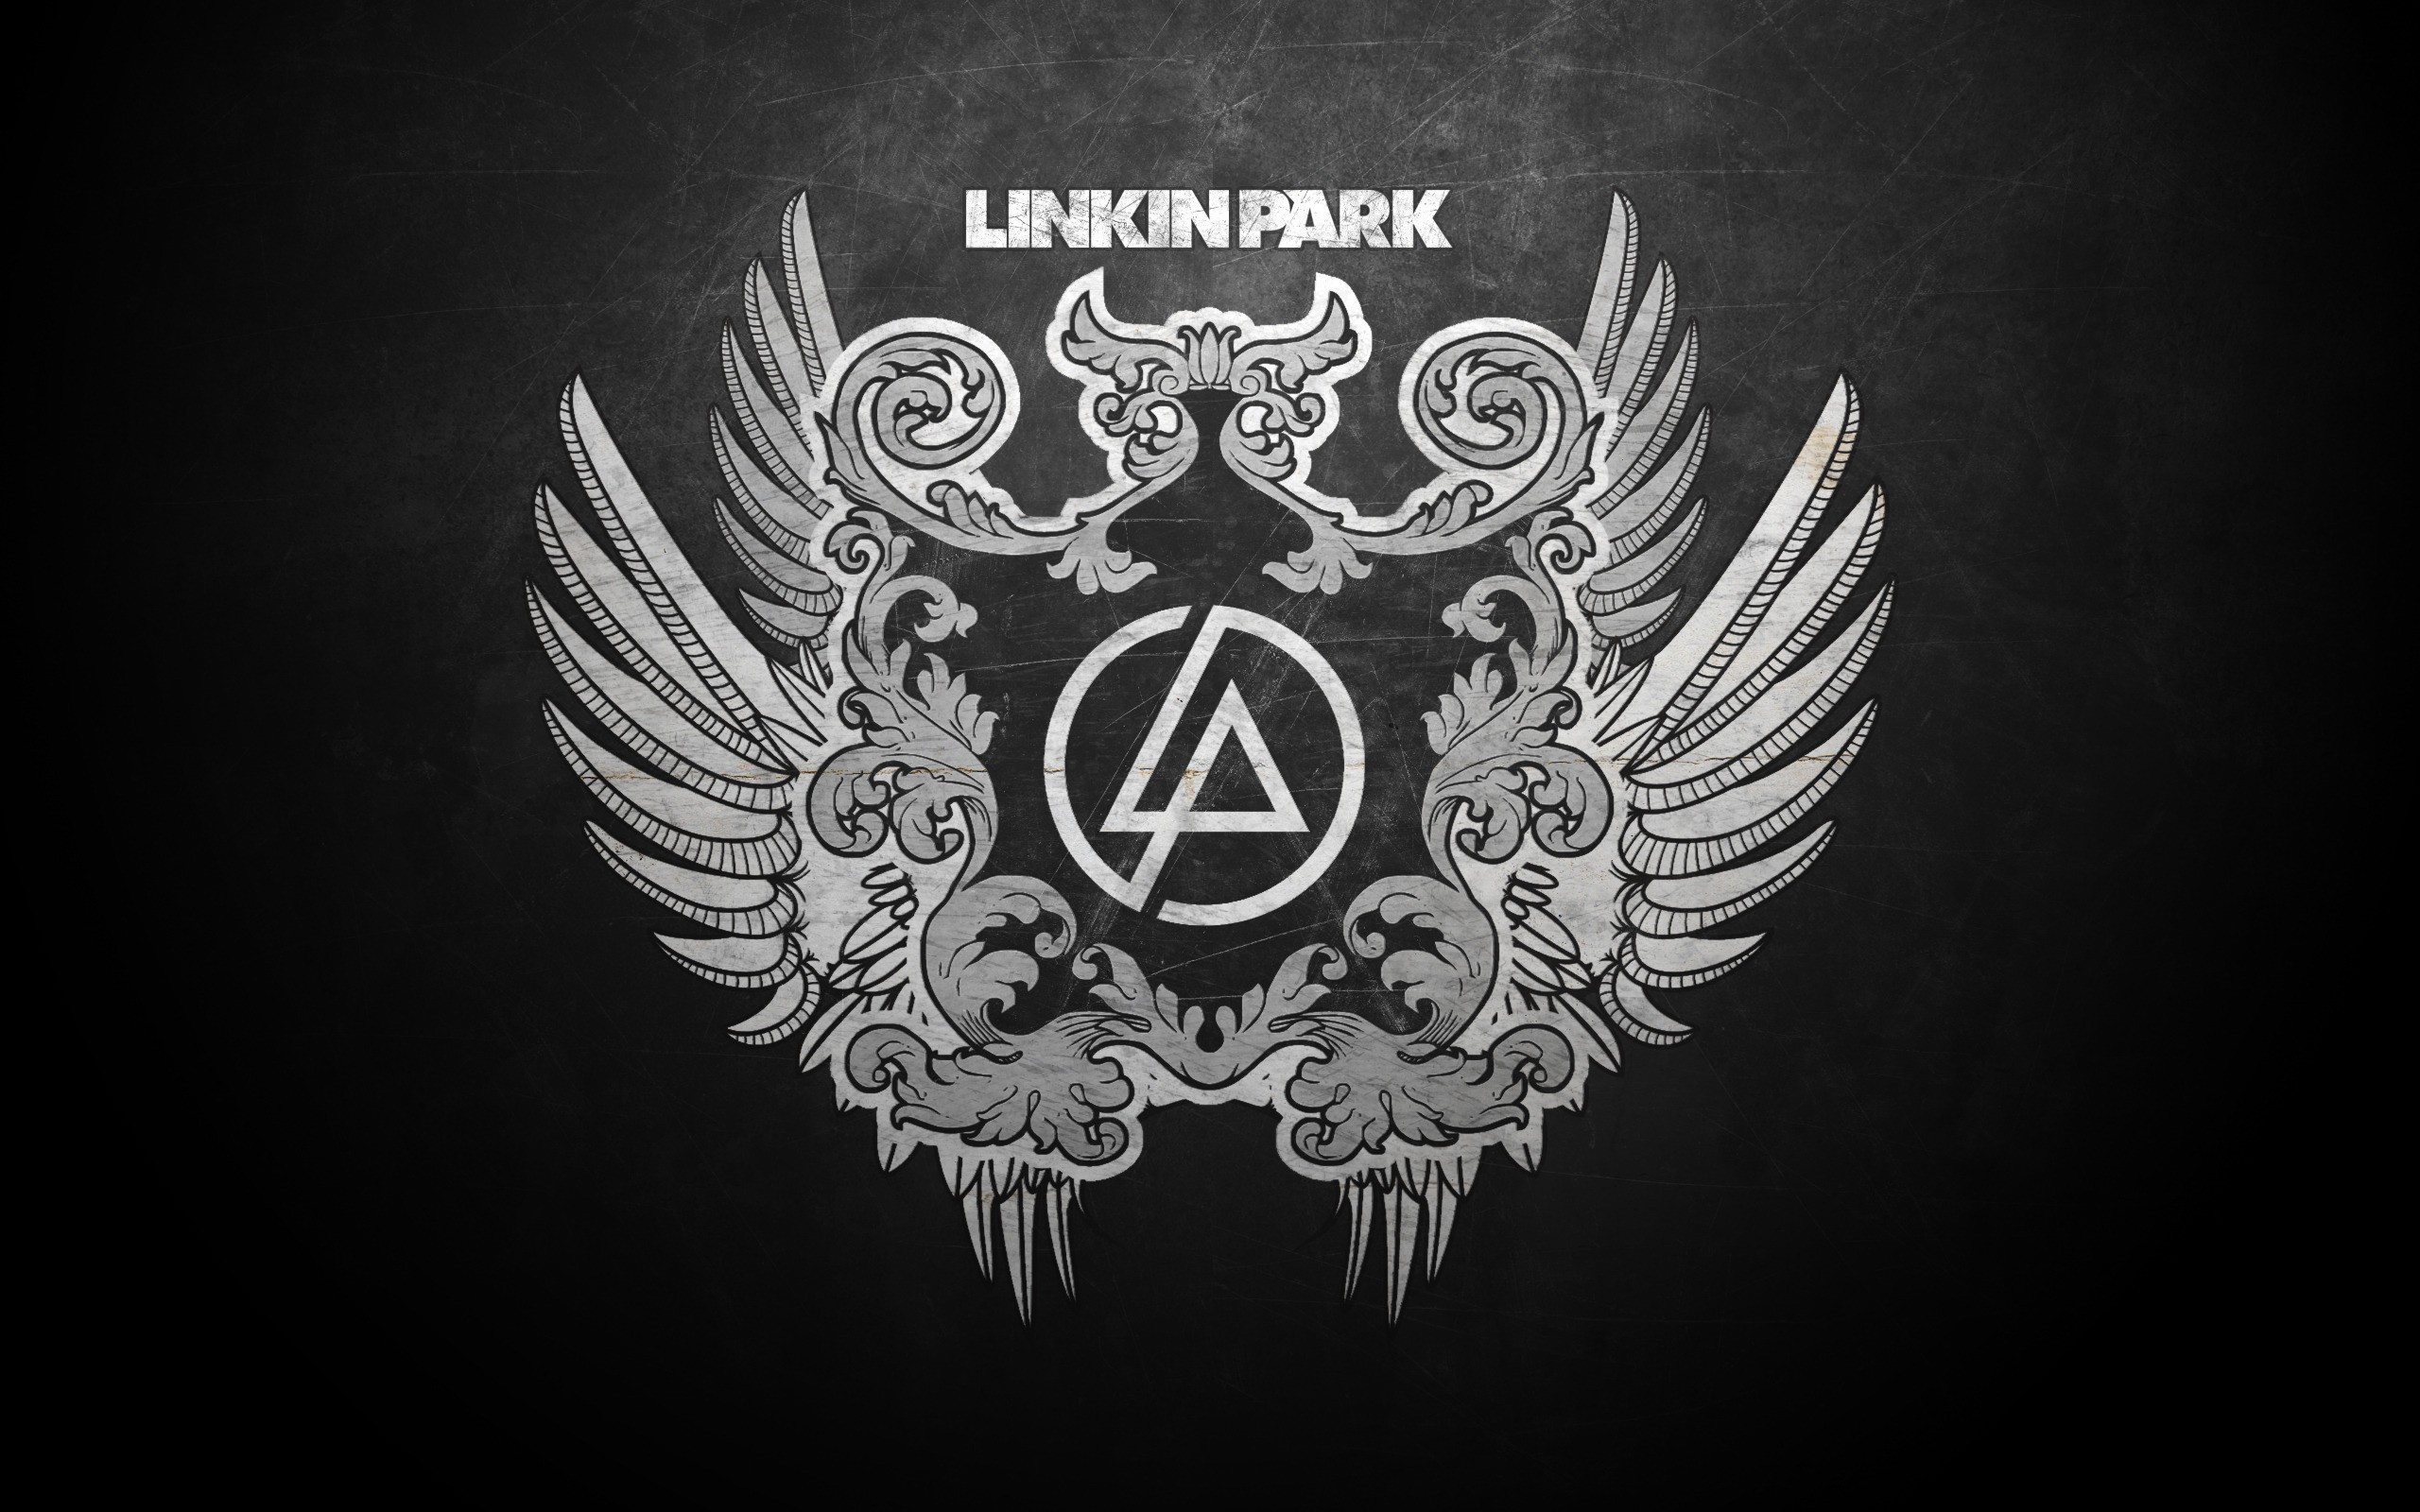 музыка, Linkin Park - обои на рабочий стол